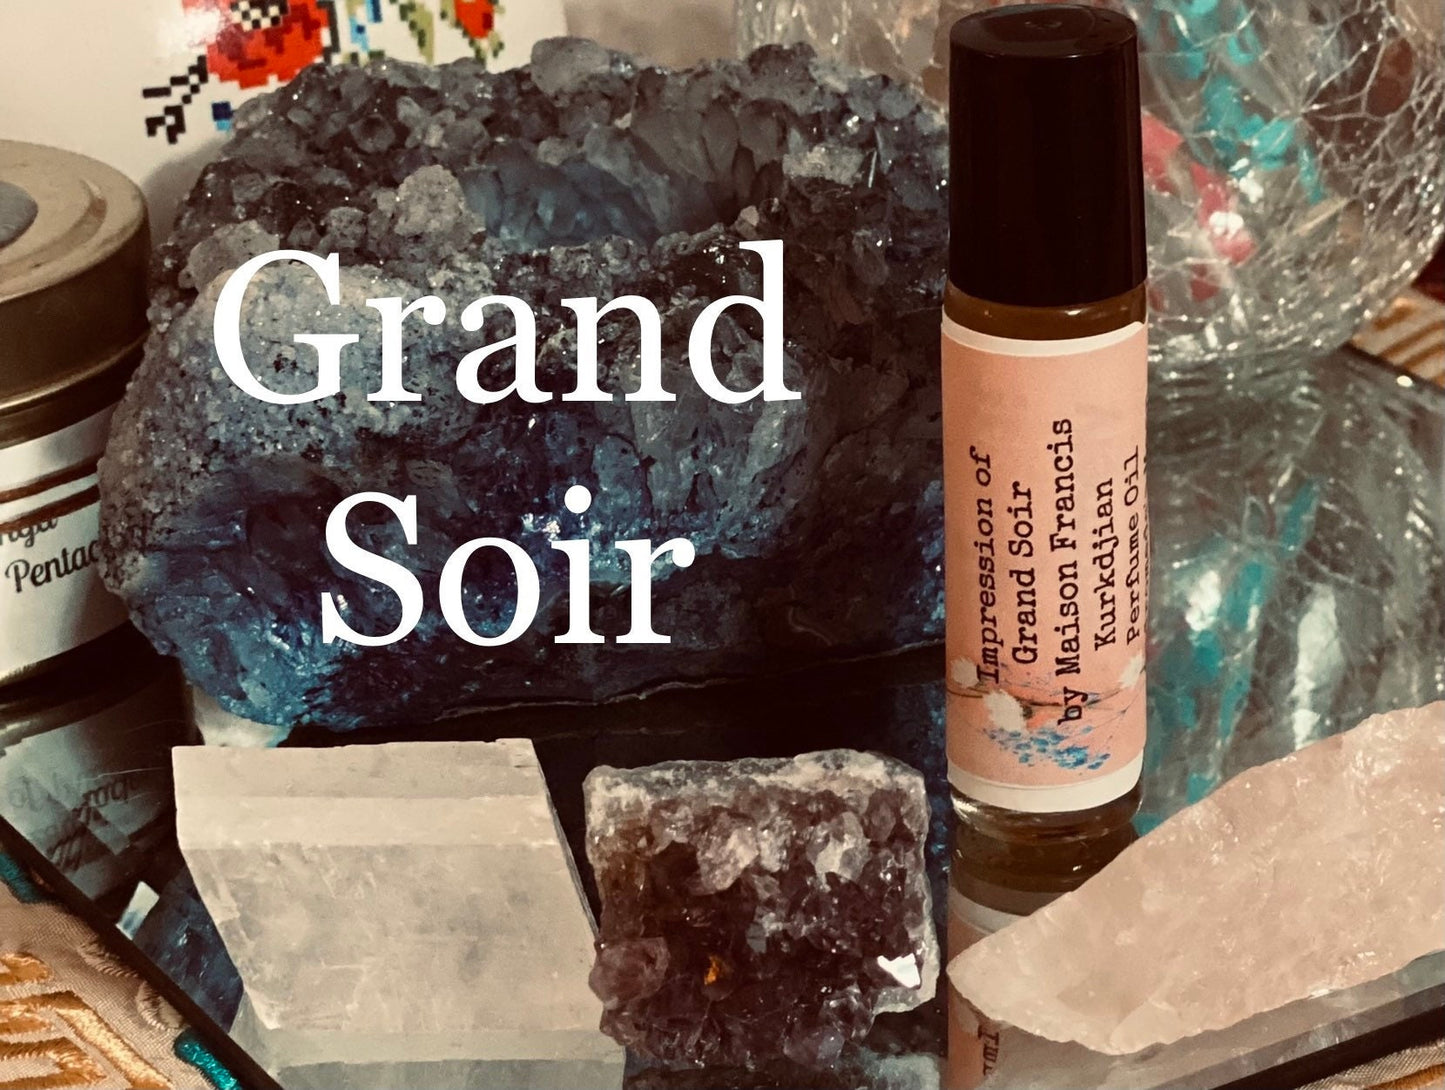 Inspired by Grand Soir Eau de Parfum